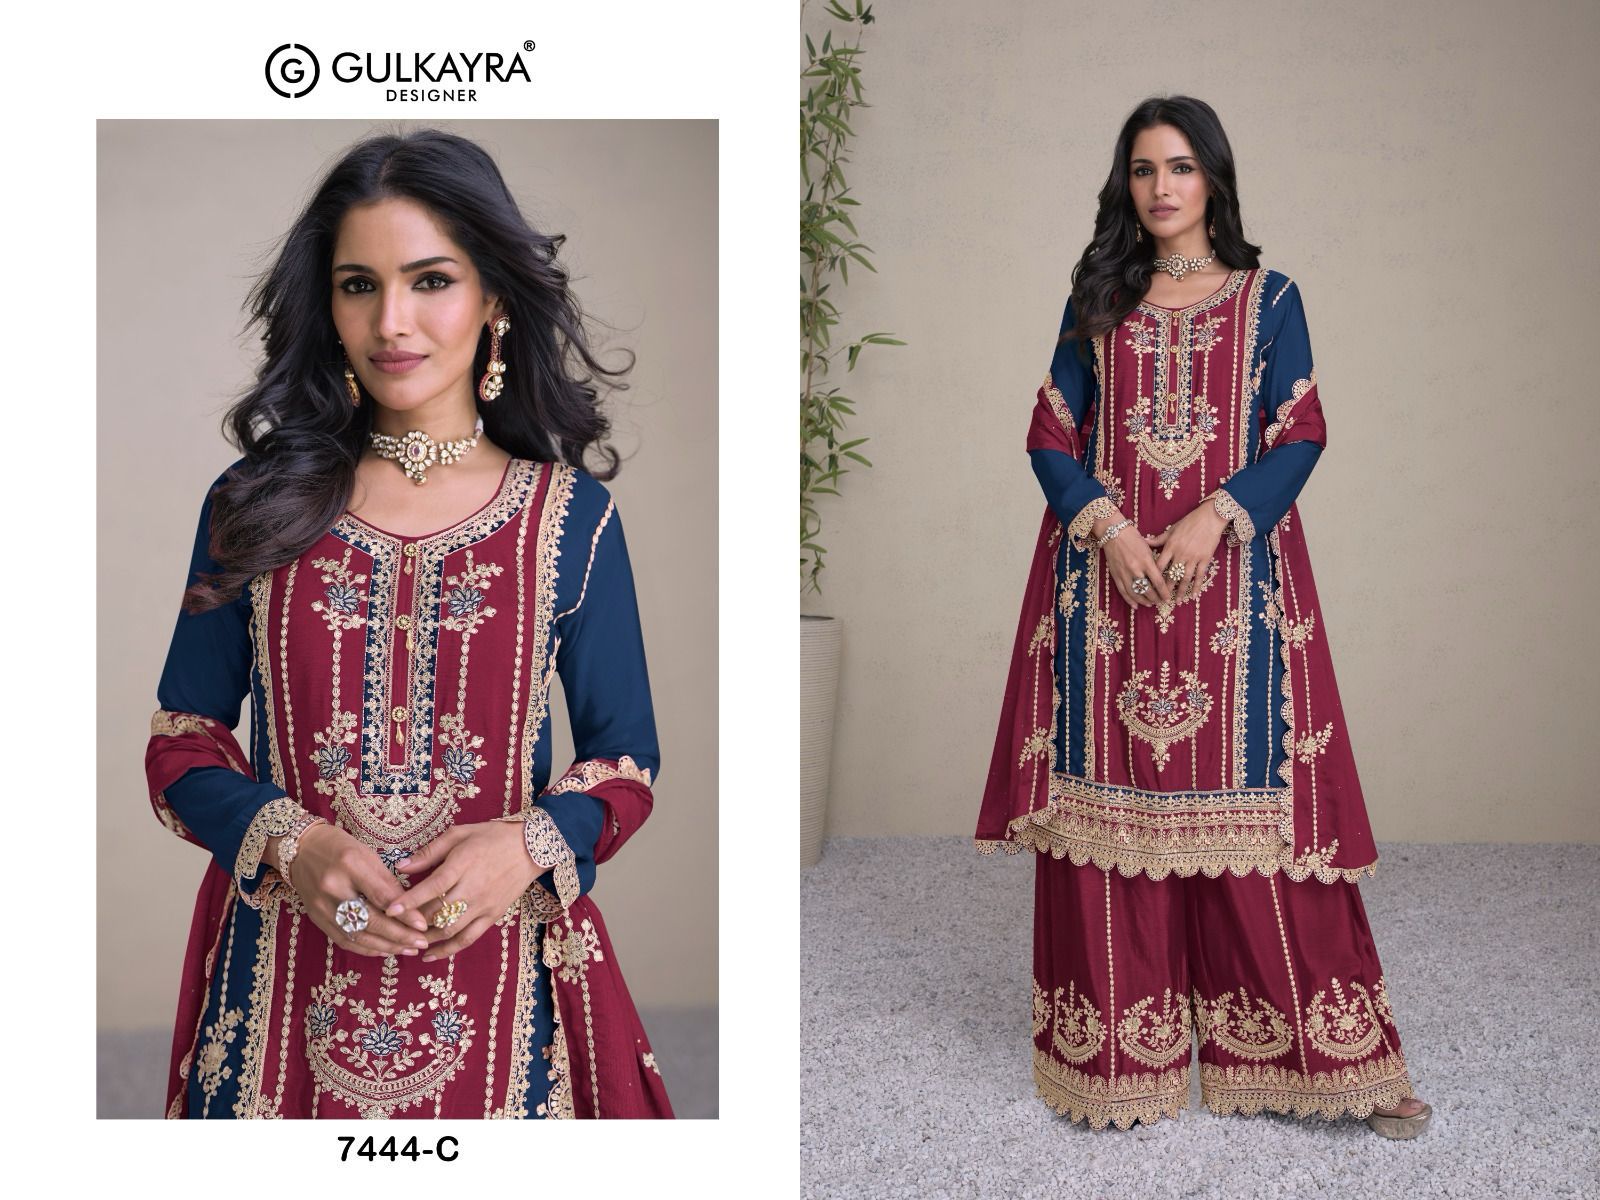 Gulkayra Designer Presents Sabina With Embroidery Work Salwar Suit Ethnic Dress